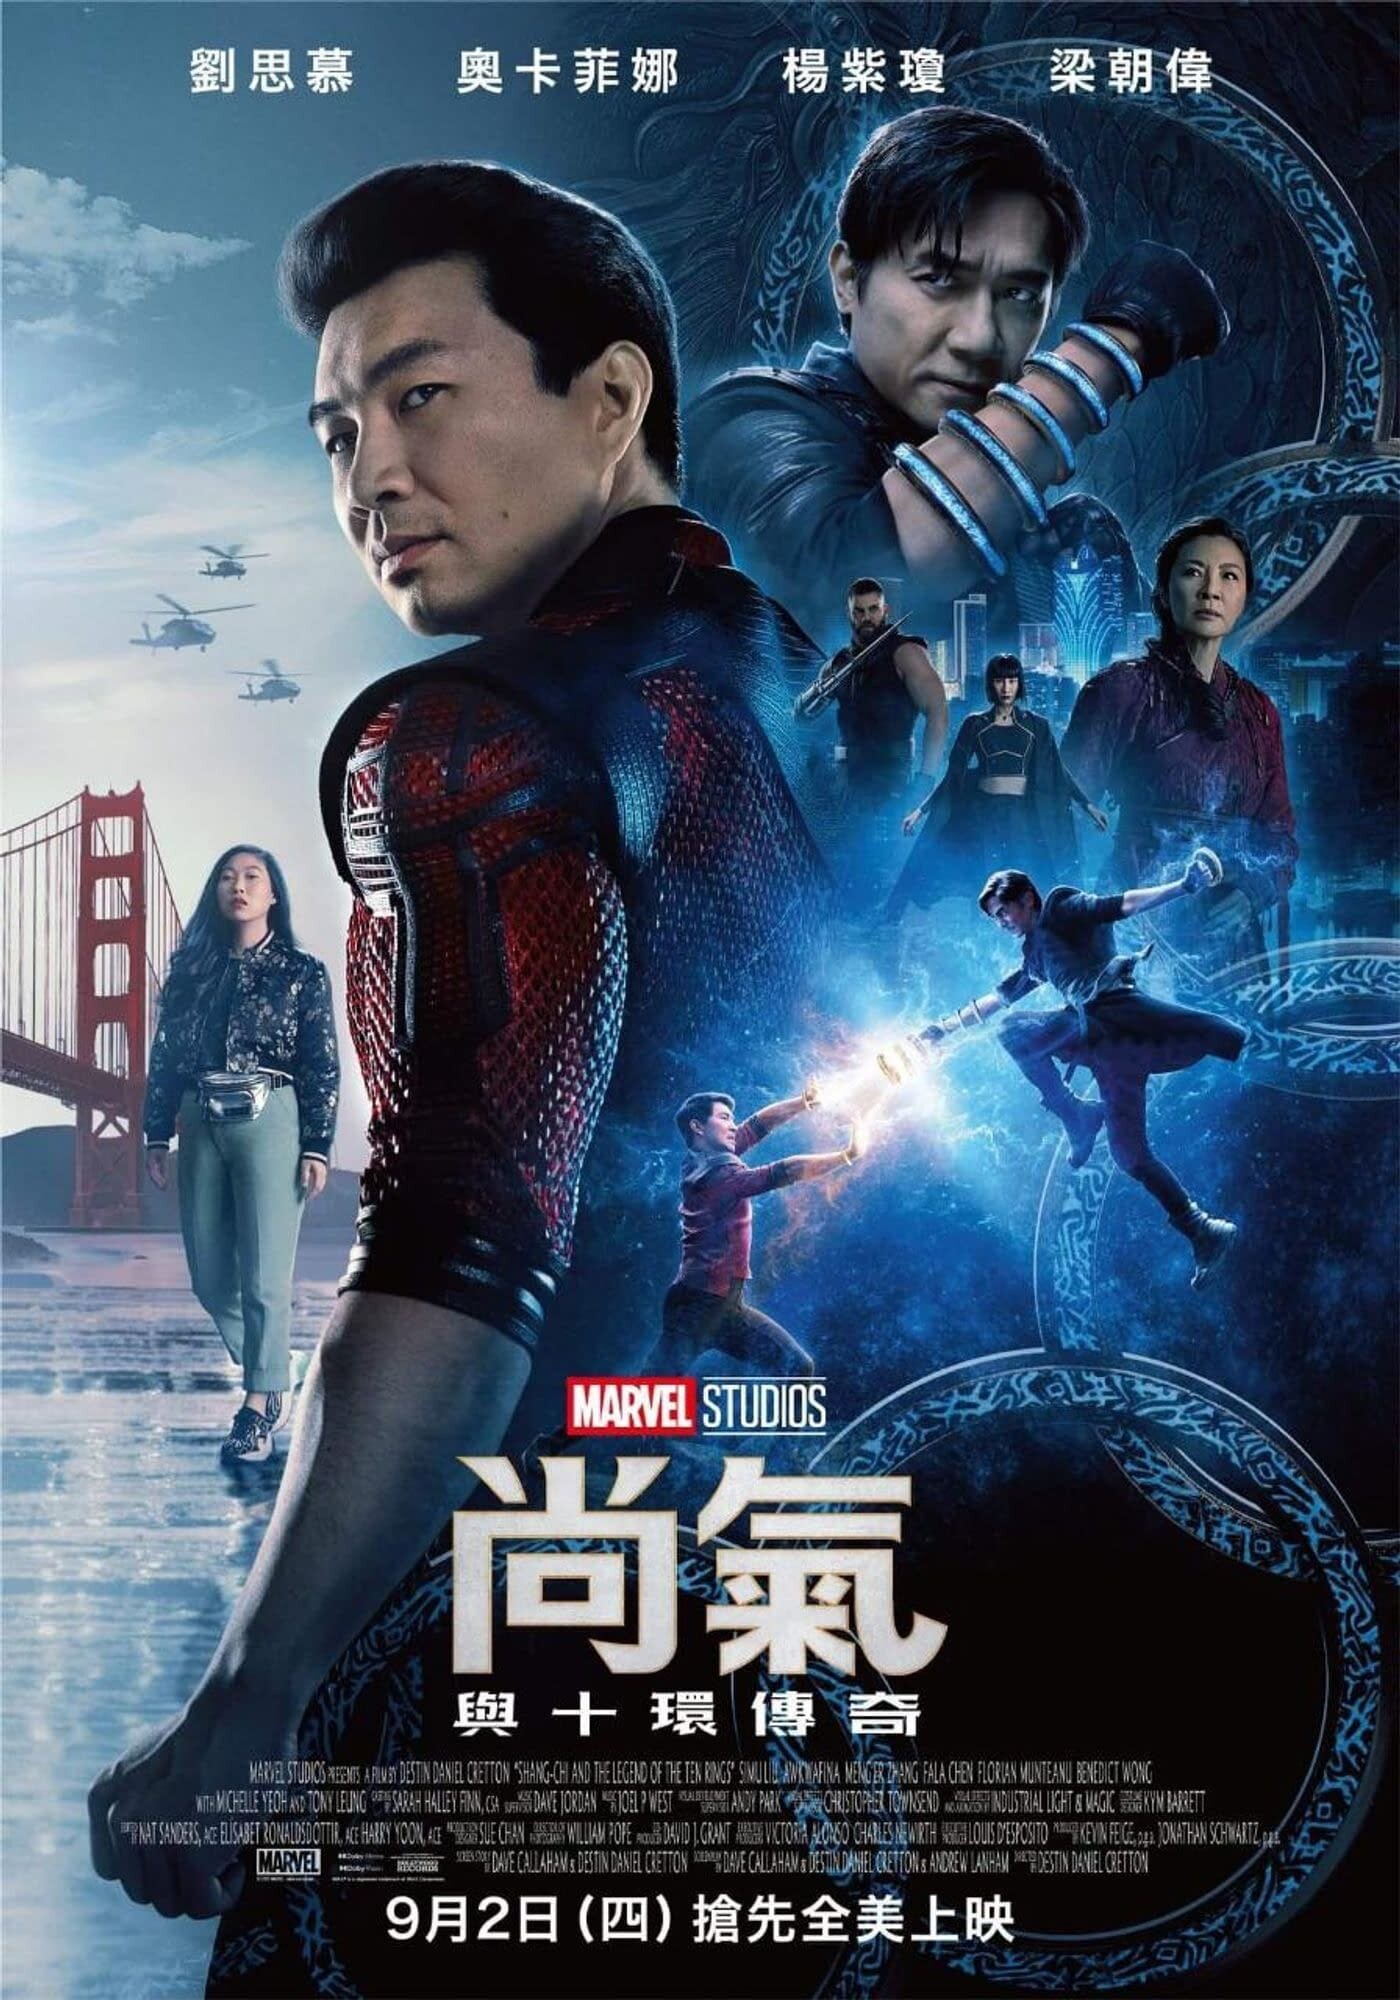 Wai nei chung ching (2010) movie posters